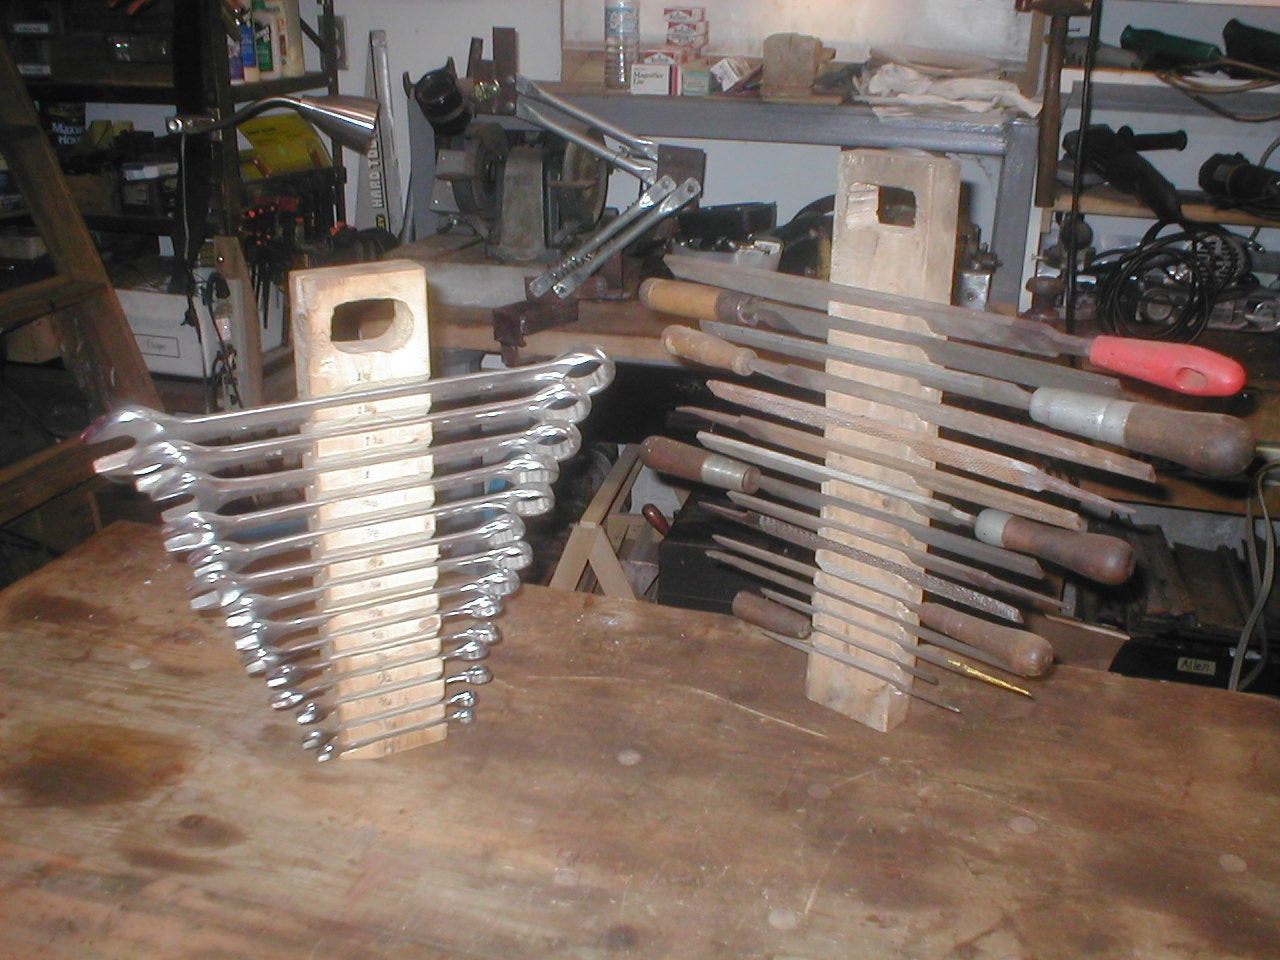 DIY Wrench Rack
 Make a Wrench Organizer